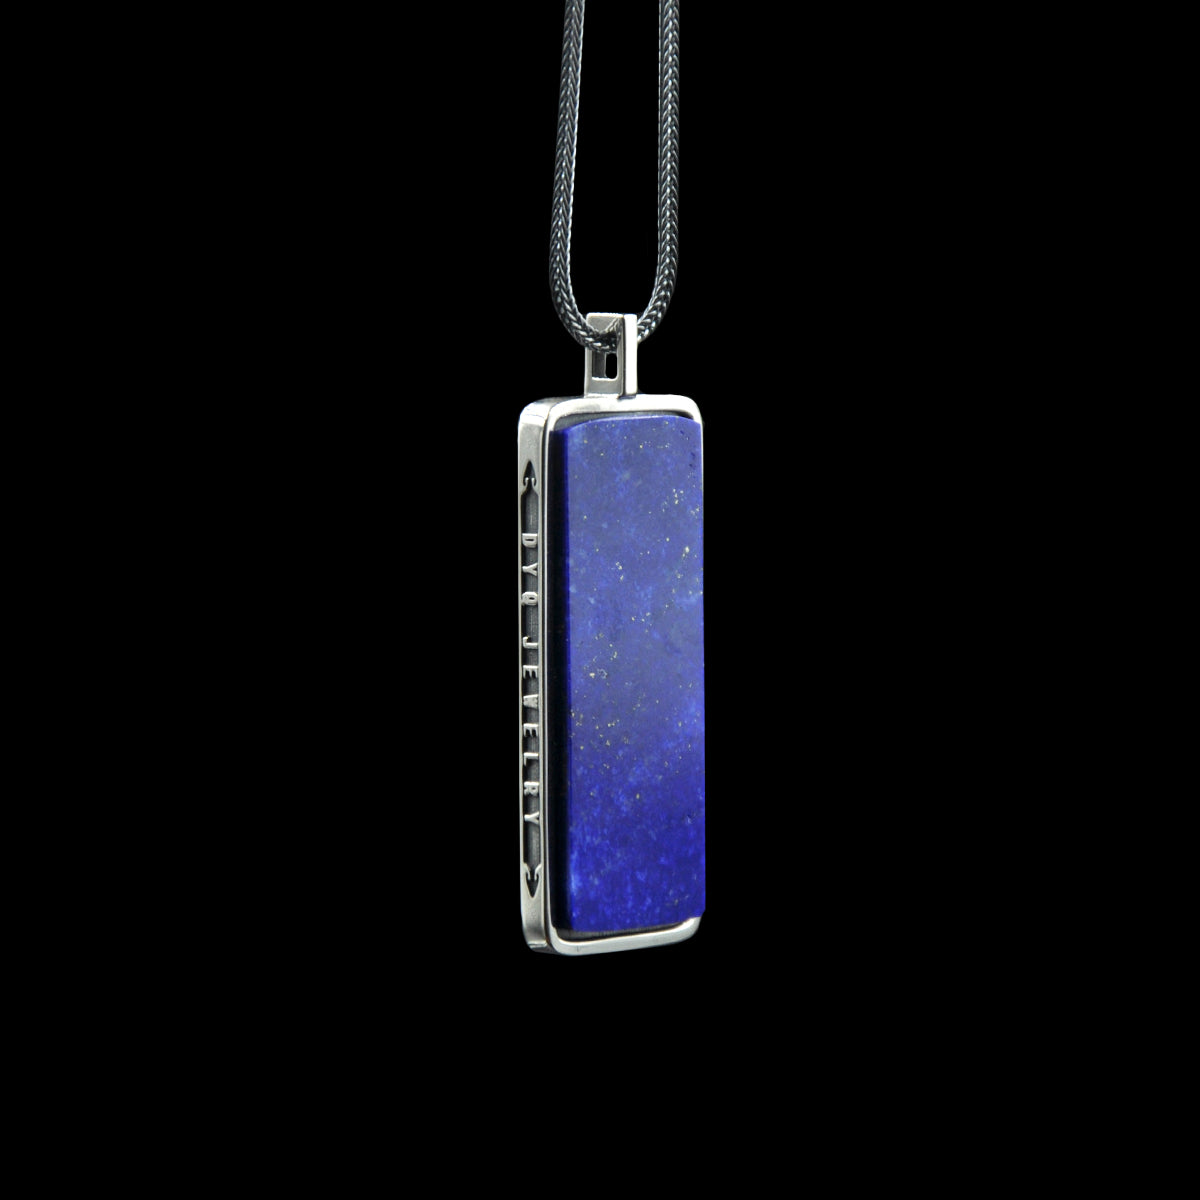 DYQ JEWELRY WuShi 925 Silver Inlay Lapis Lazuli Pendant Men's Necklace